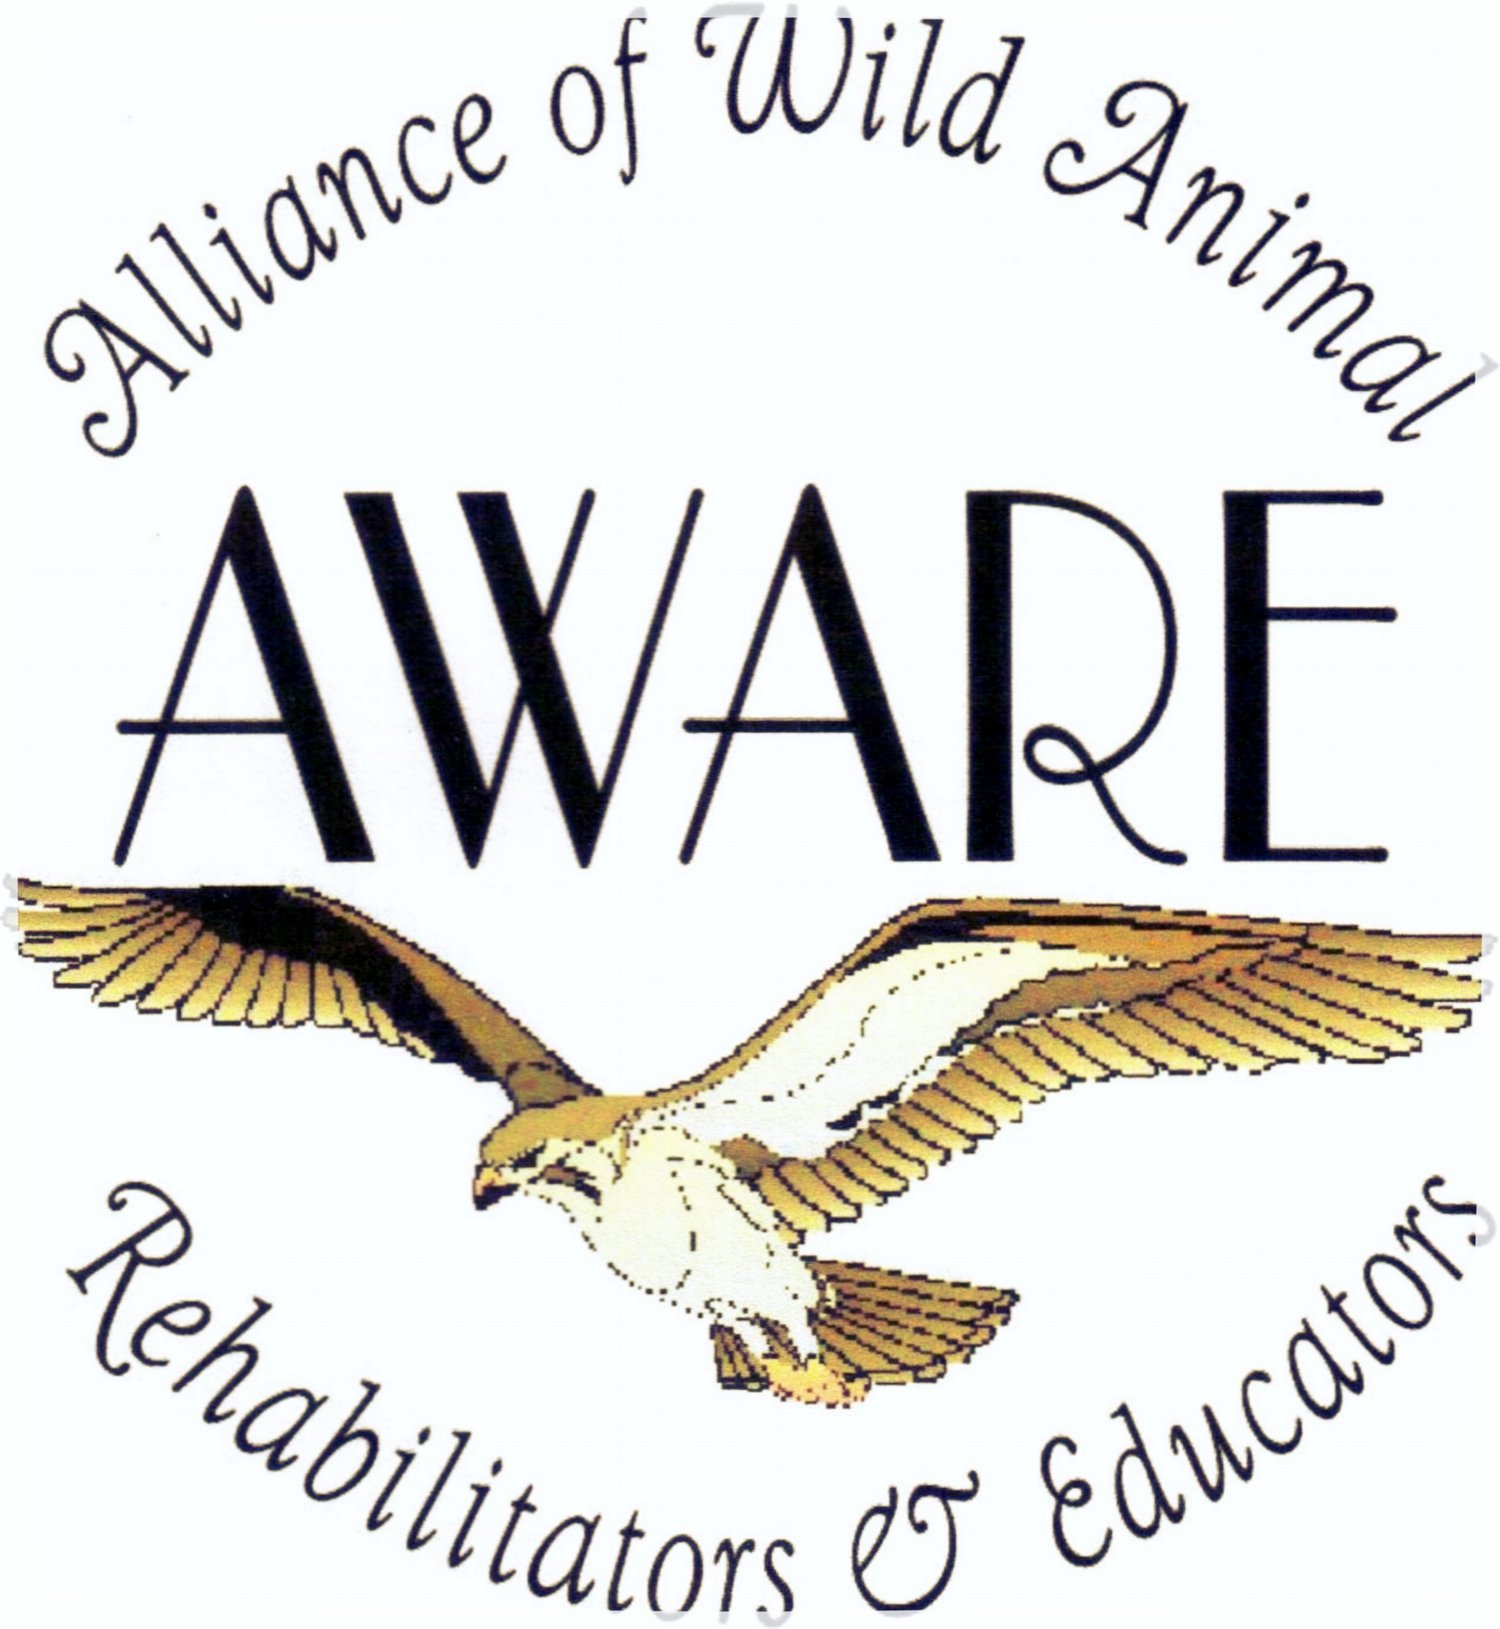 Aware (Alliance of Wild Animal Rehabilitators and Educators)